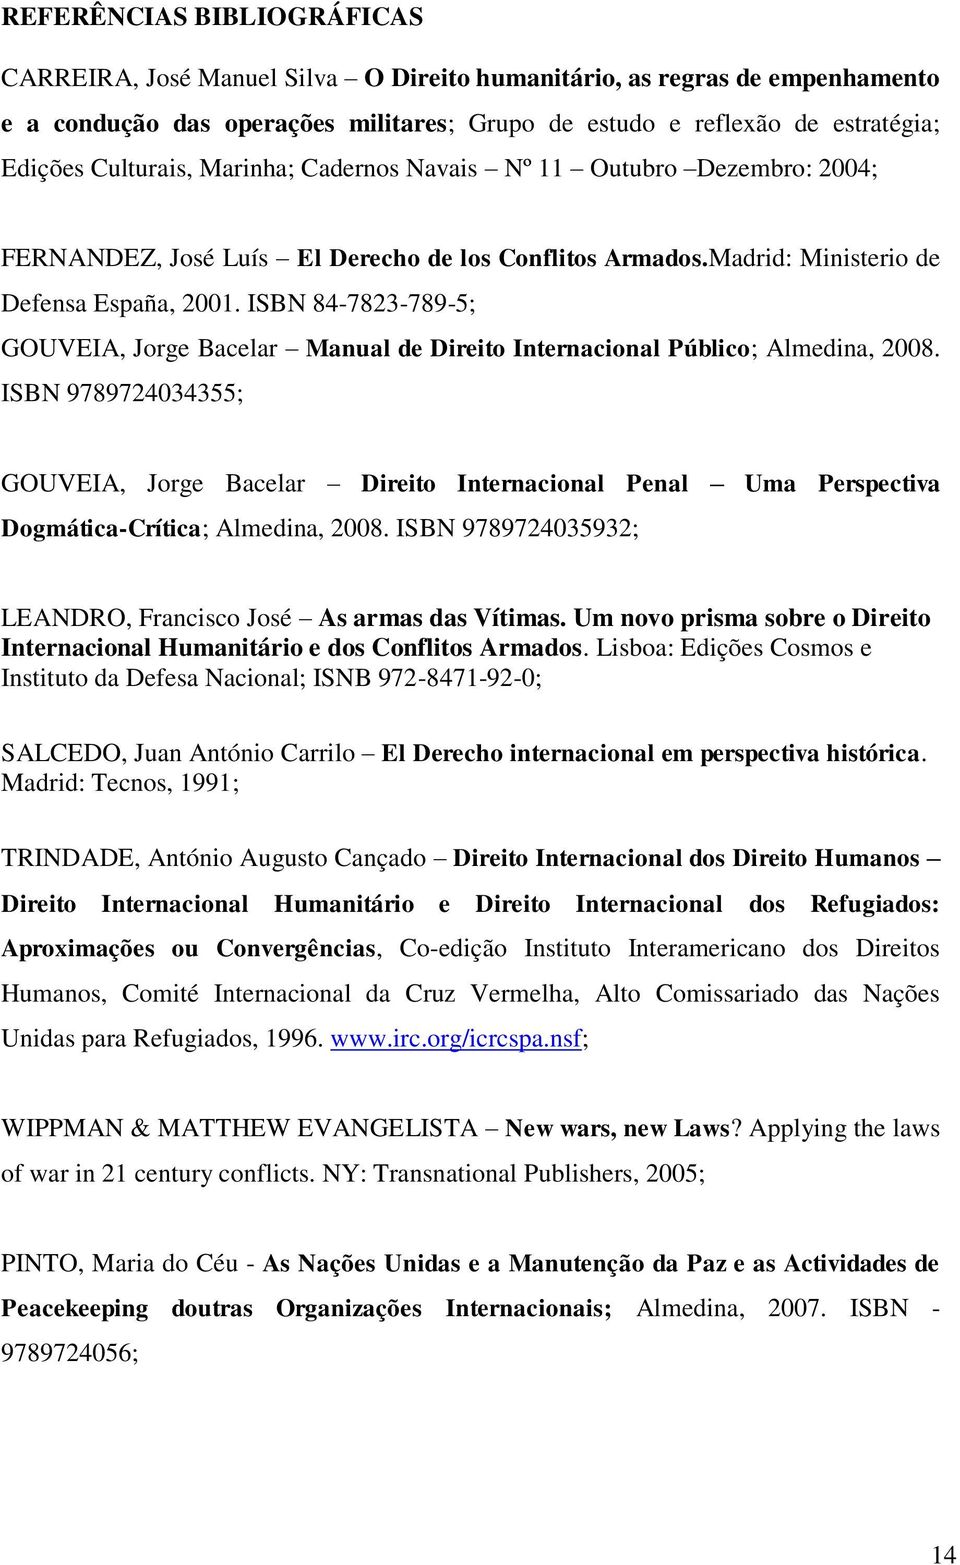 ISBN 84-7823-789-5; GOUVEIA, Jorge Bacelar Manual de Direito Internacional Público; Almedina, 2008.